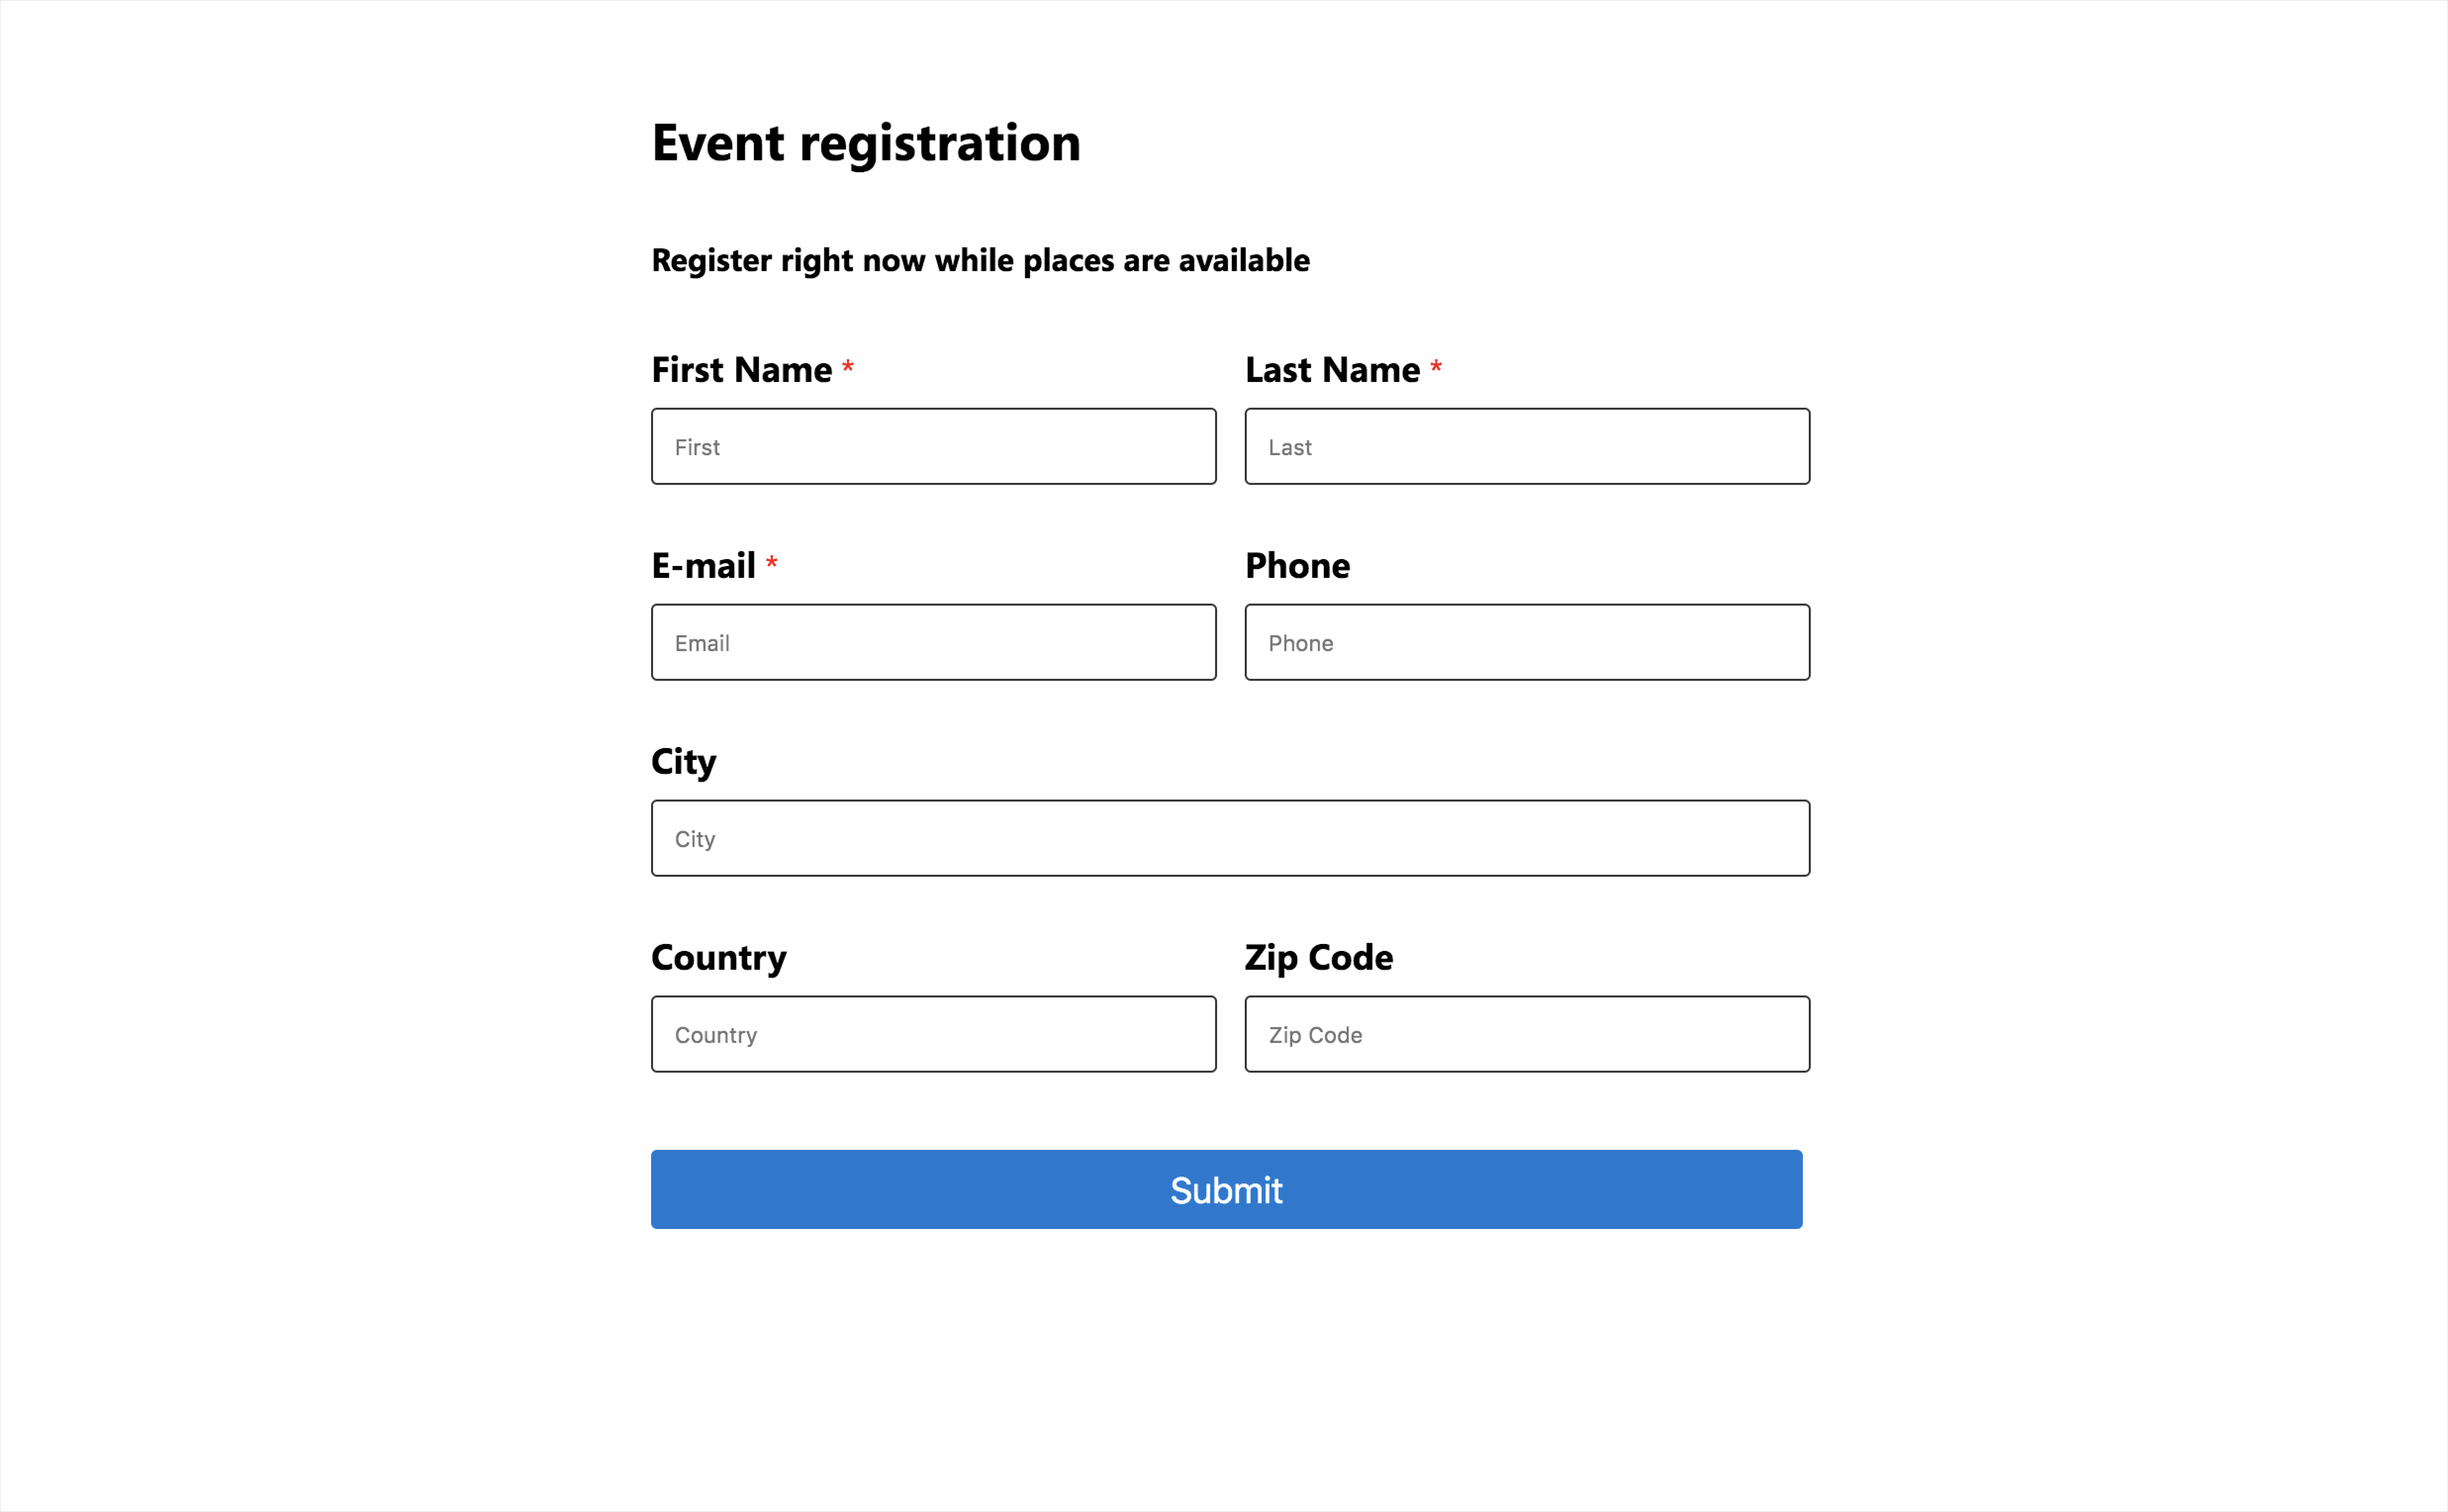 Event registration using marketing forms